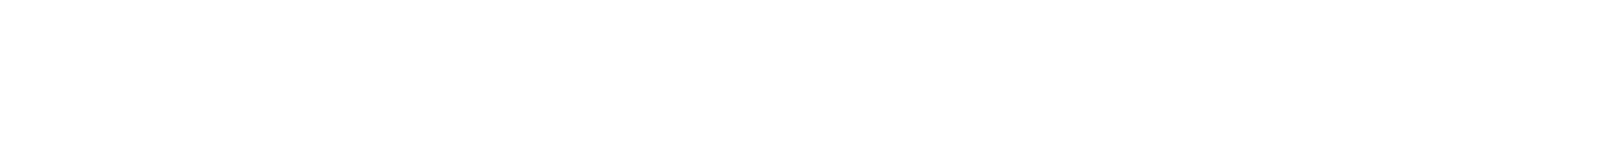 Lennar Logo groß für dunkle Hintergründe (transparentes PNG)